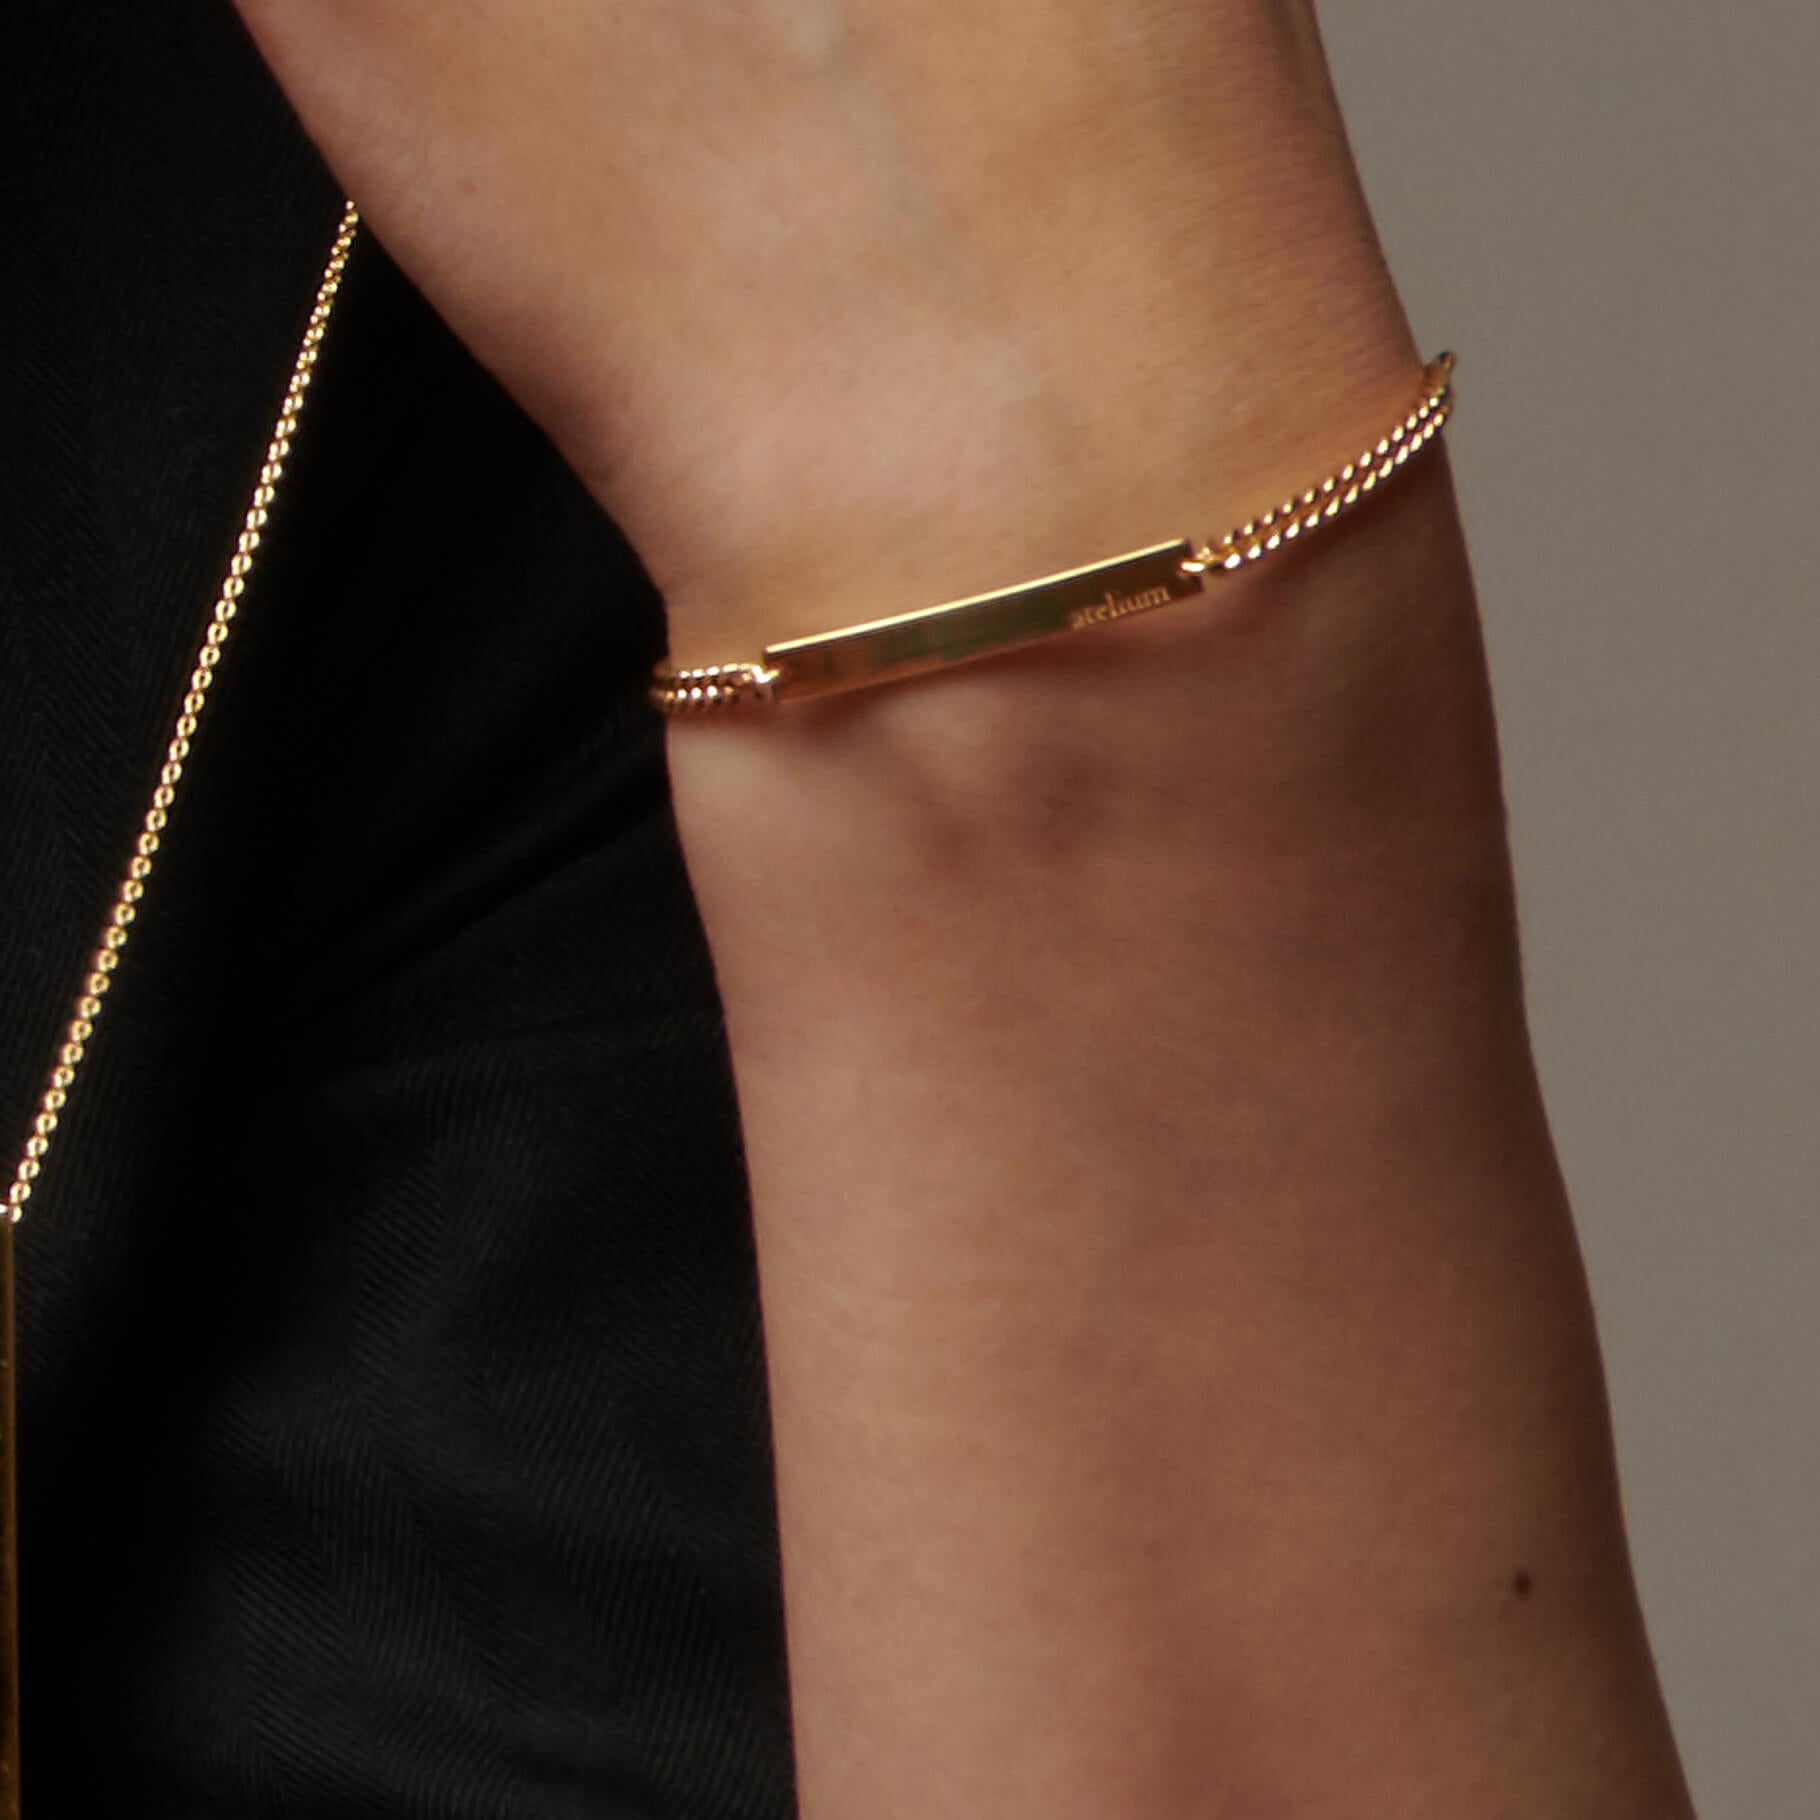 Up close image of a wrist wearing atelium gold ID bracelet